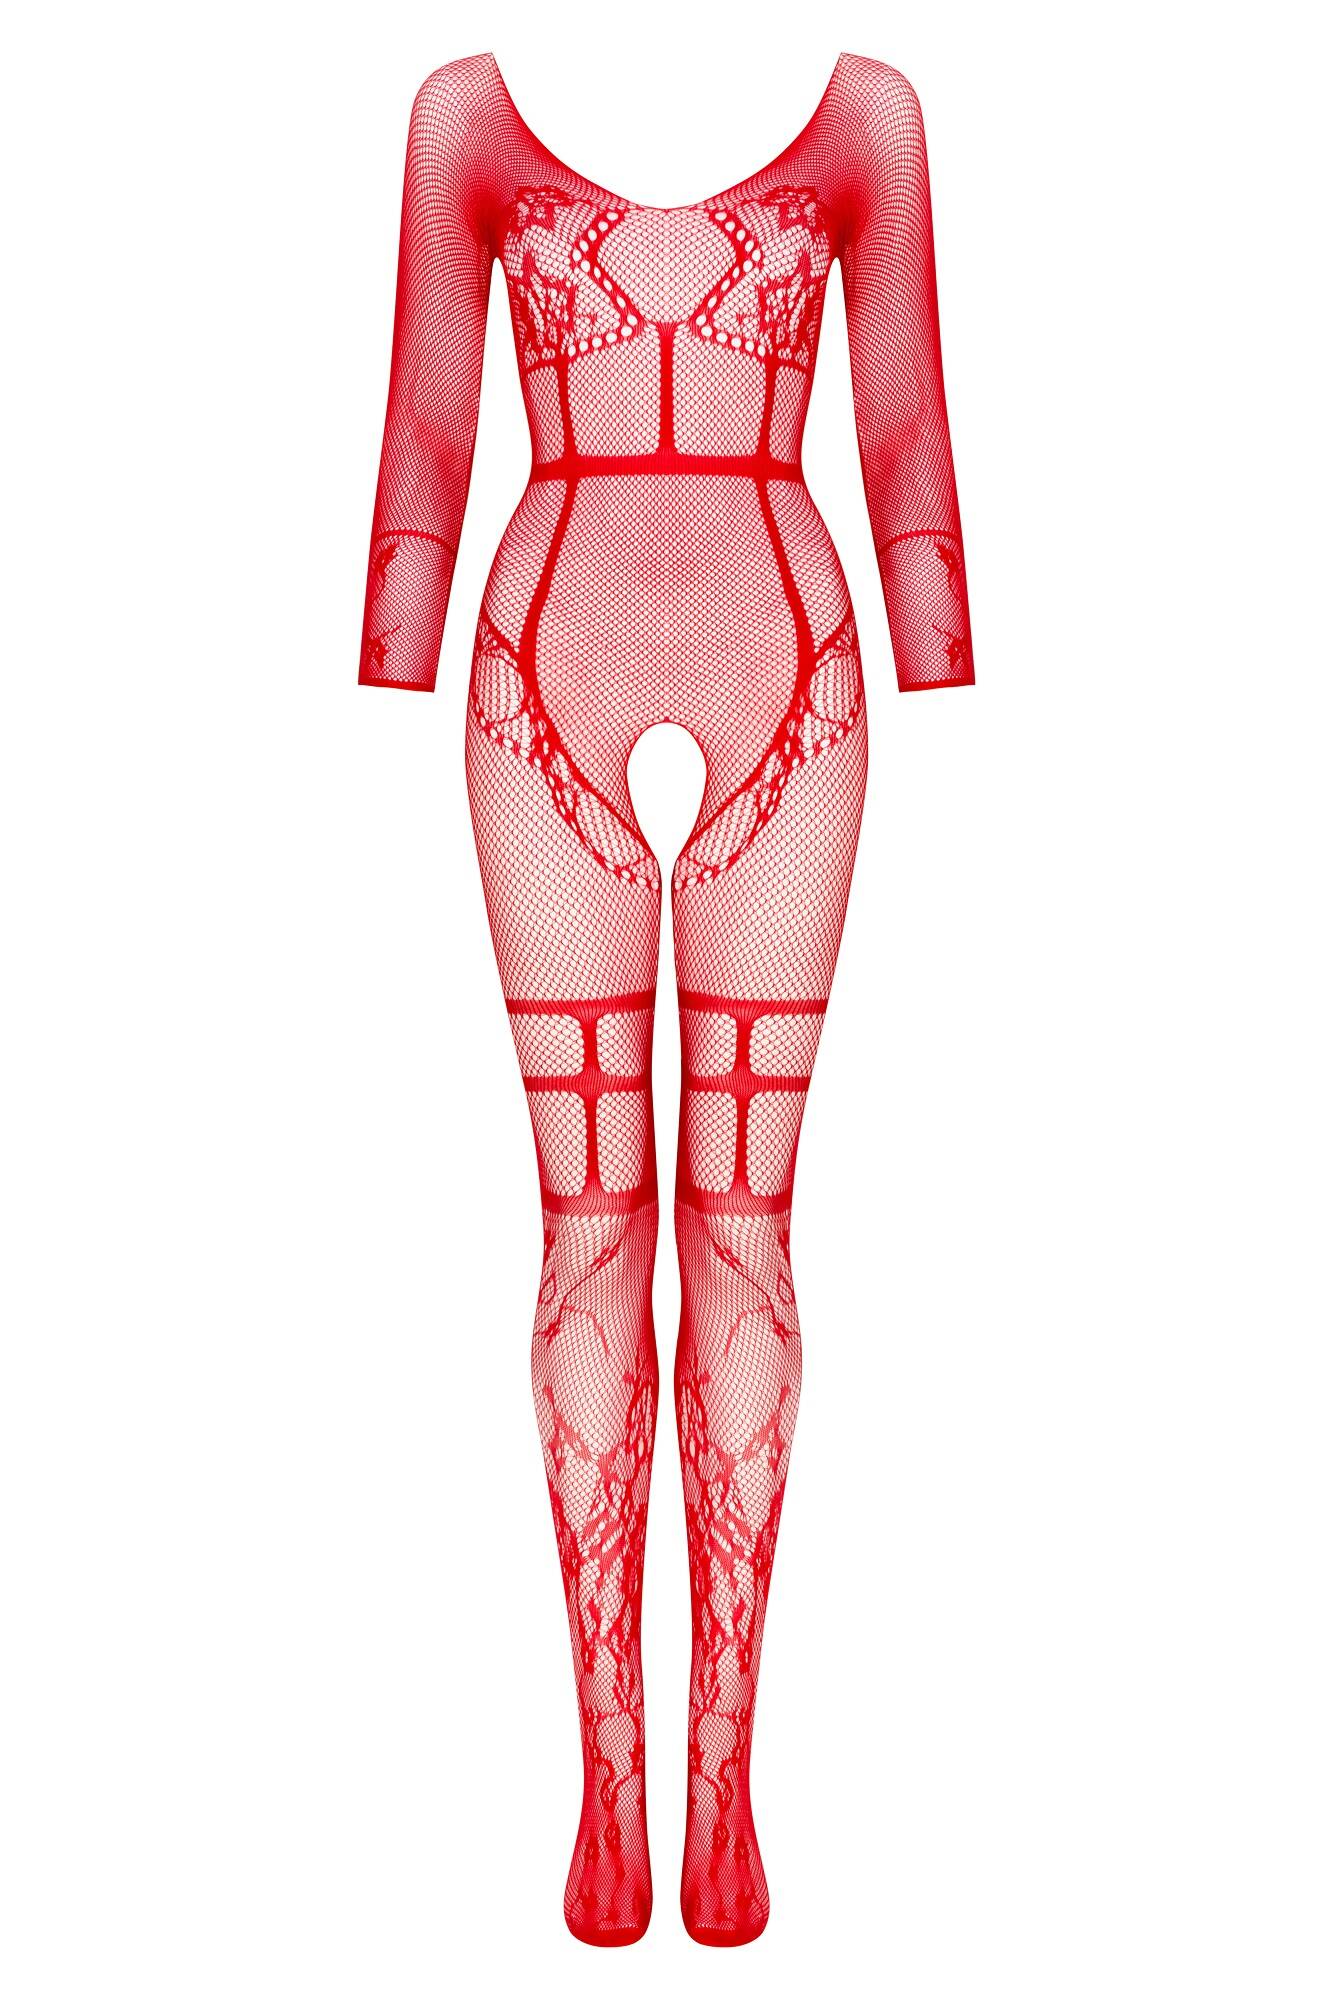 Lorna red bodystocking - Beauty Night